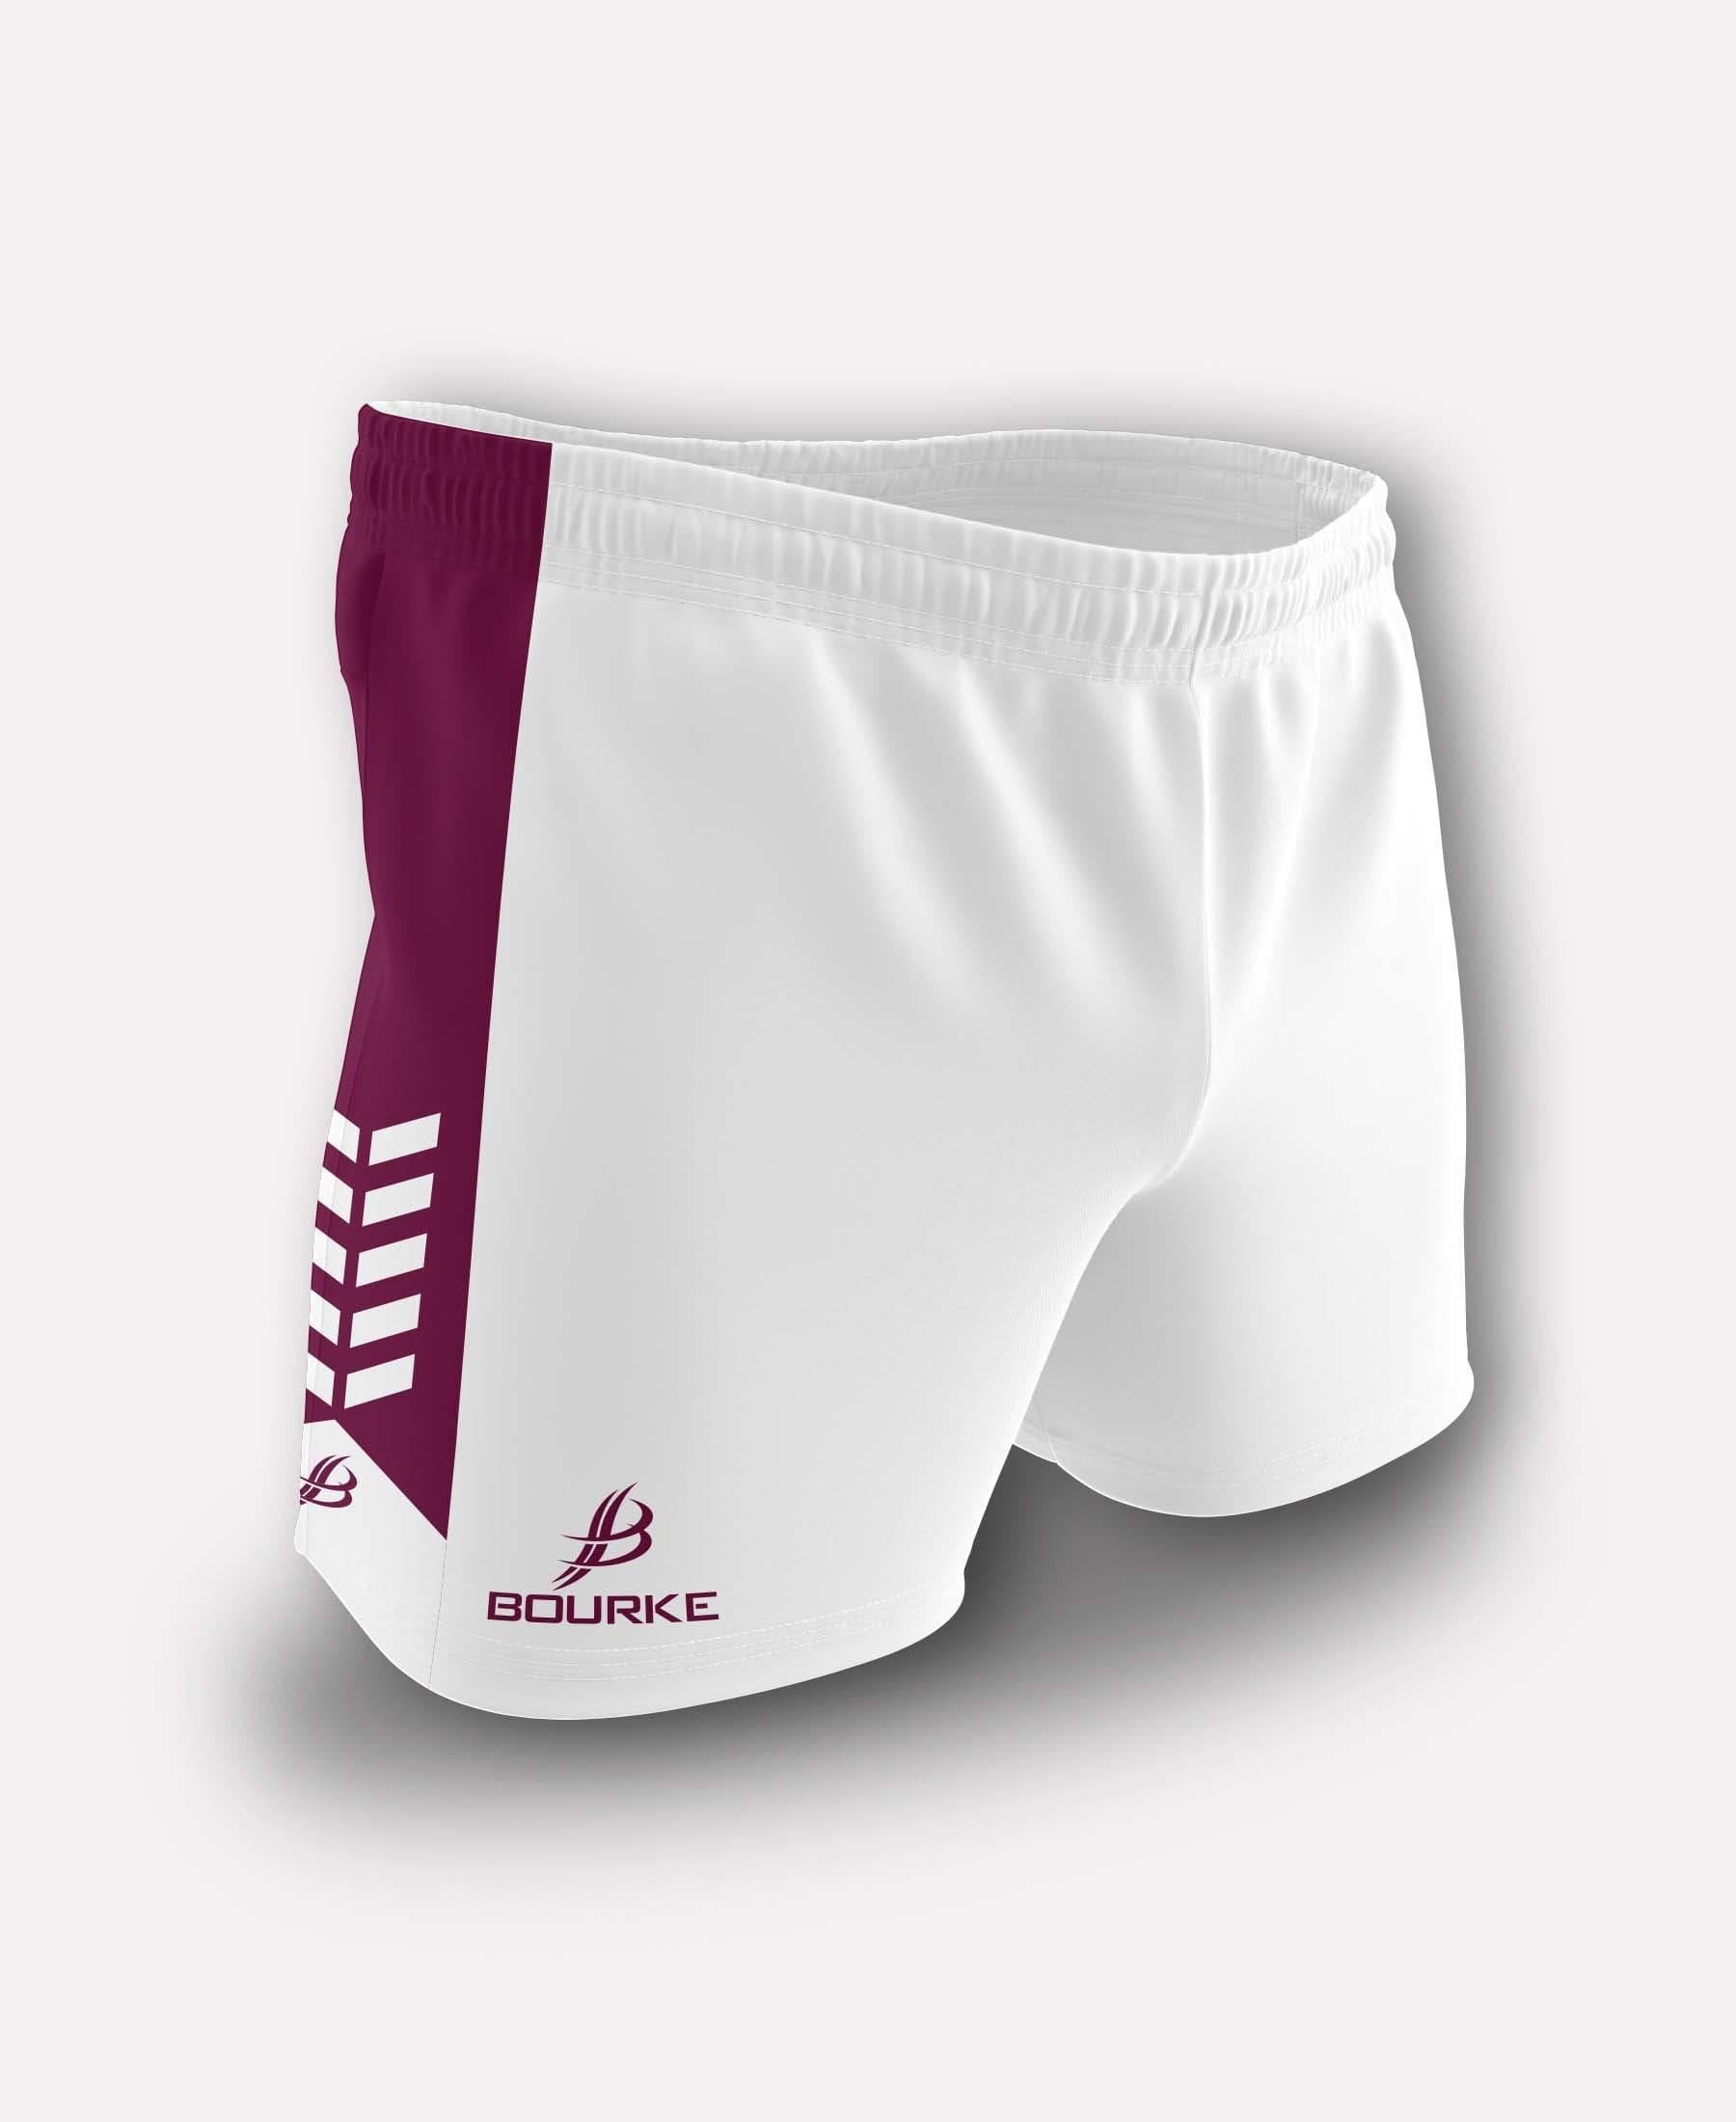 Chevron Kids Shorts (White/Maroon) - Bourke Sports Limited